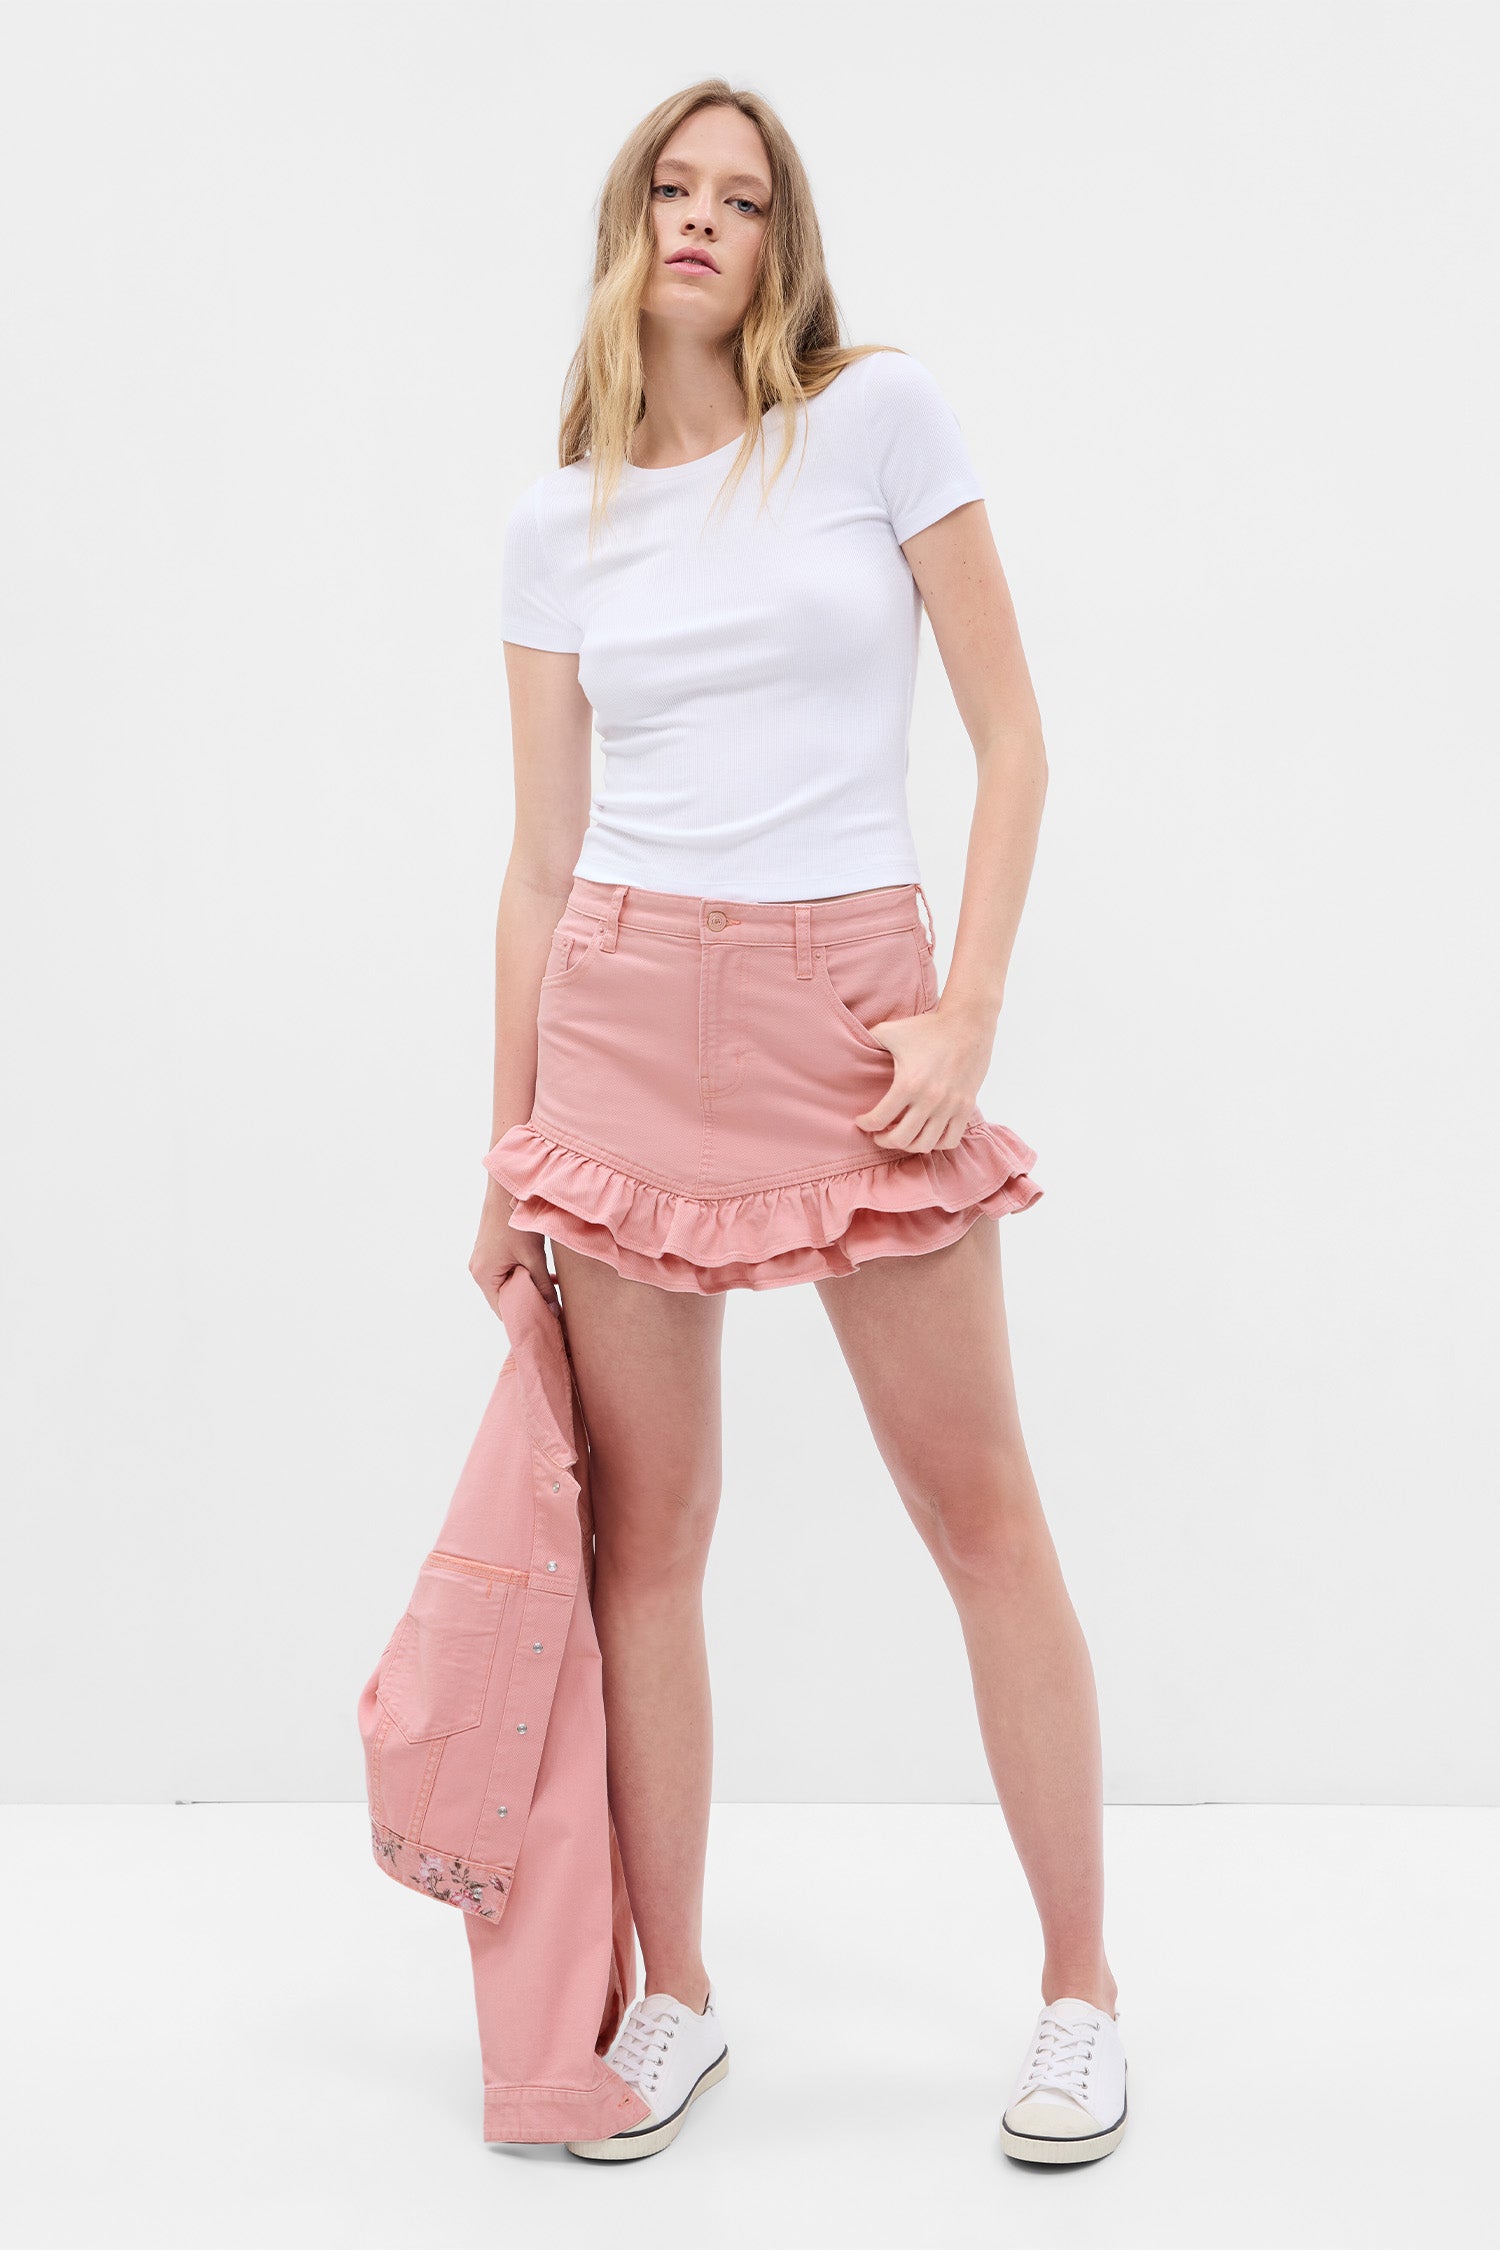 Model wearing pink denim mini skirt with ruffle detail at hem